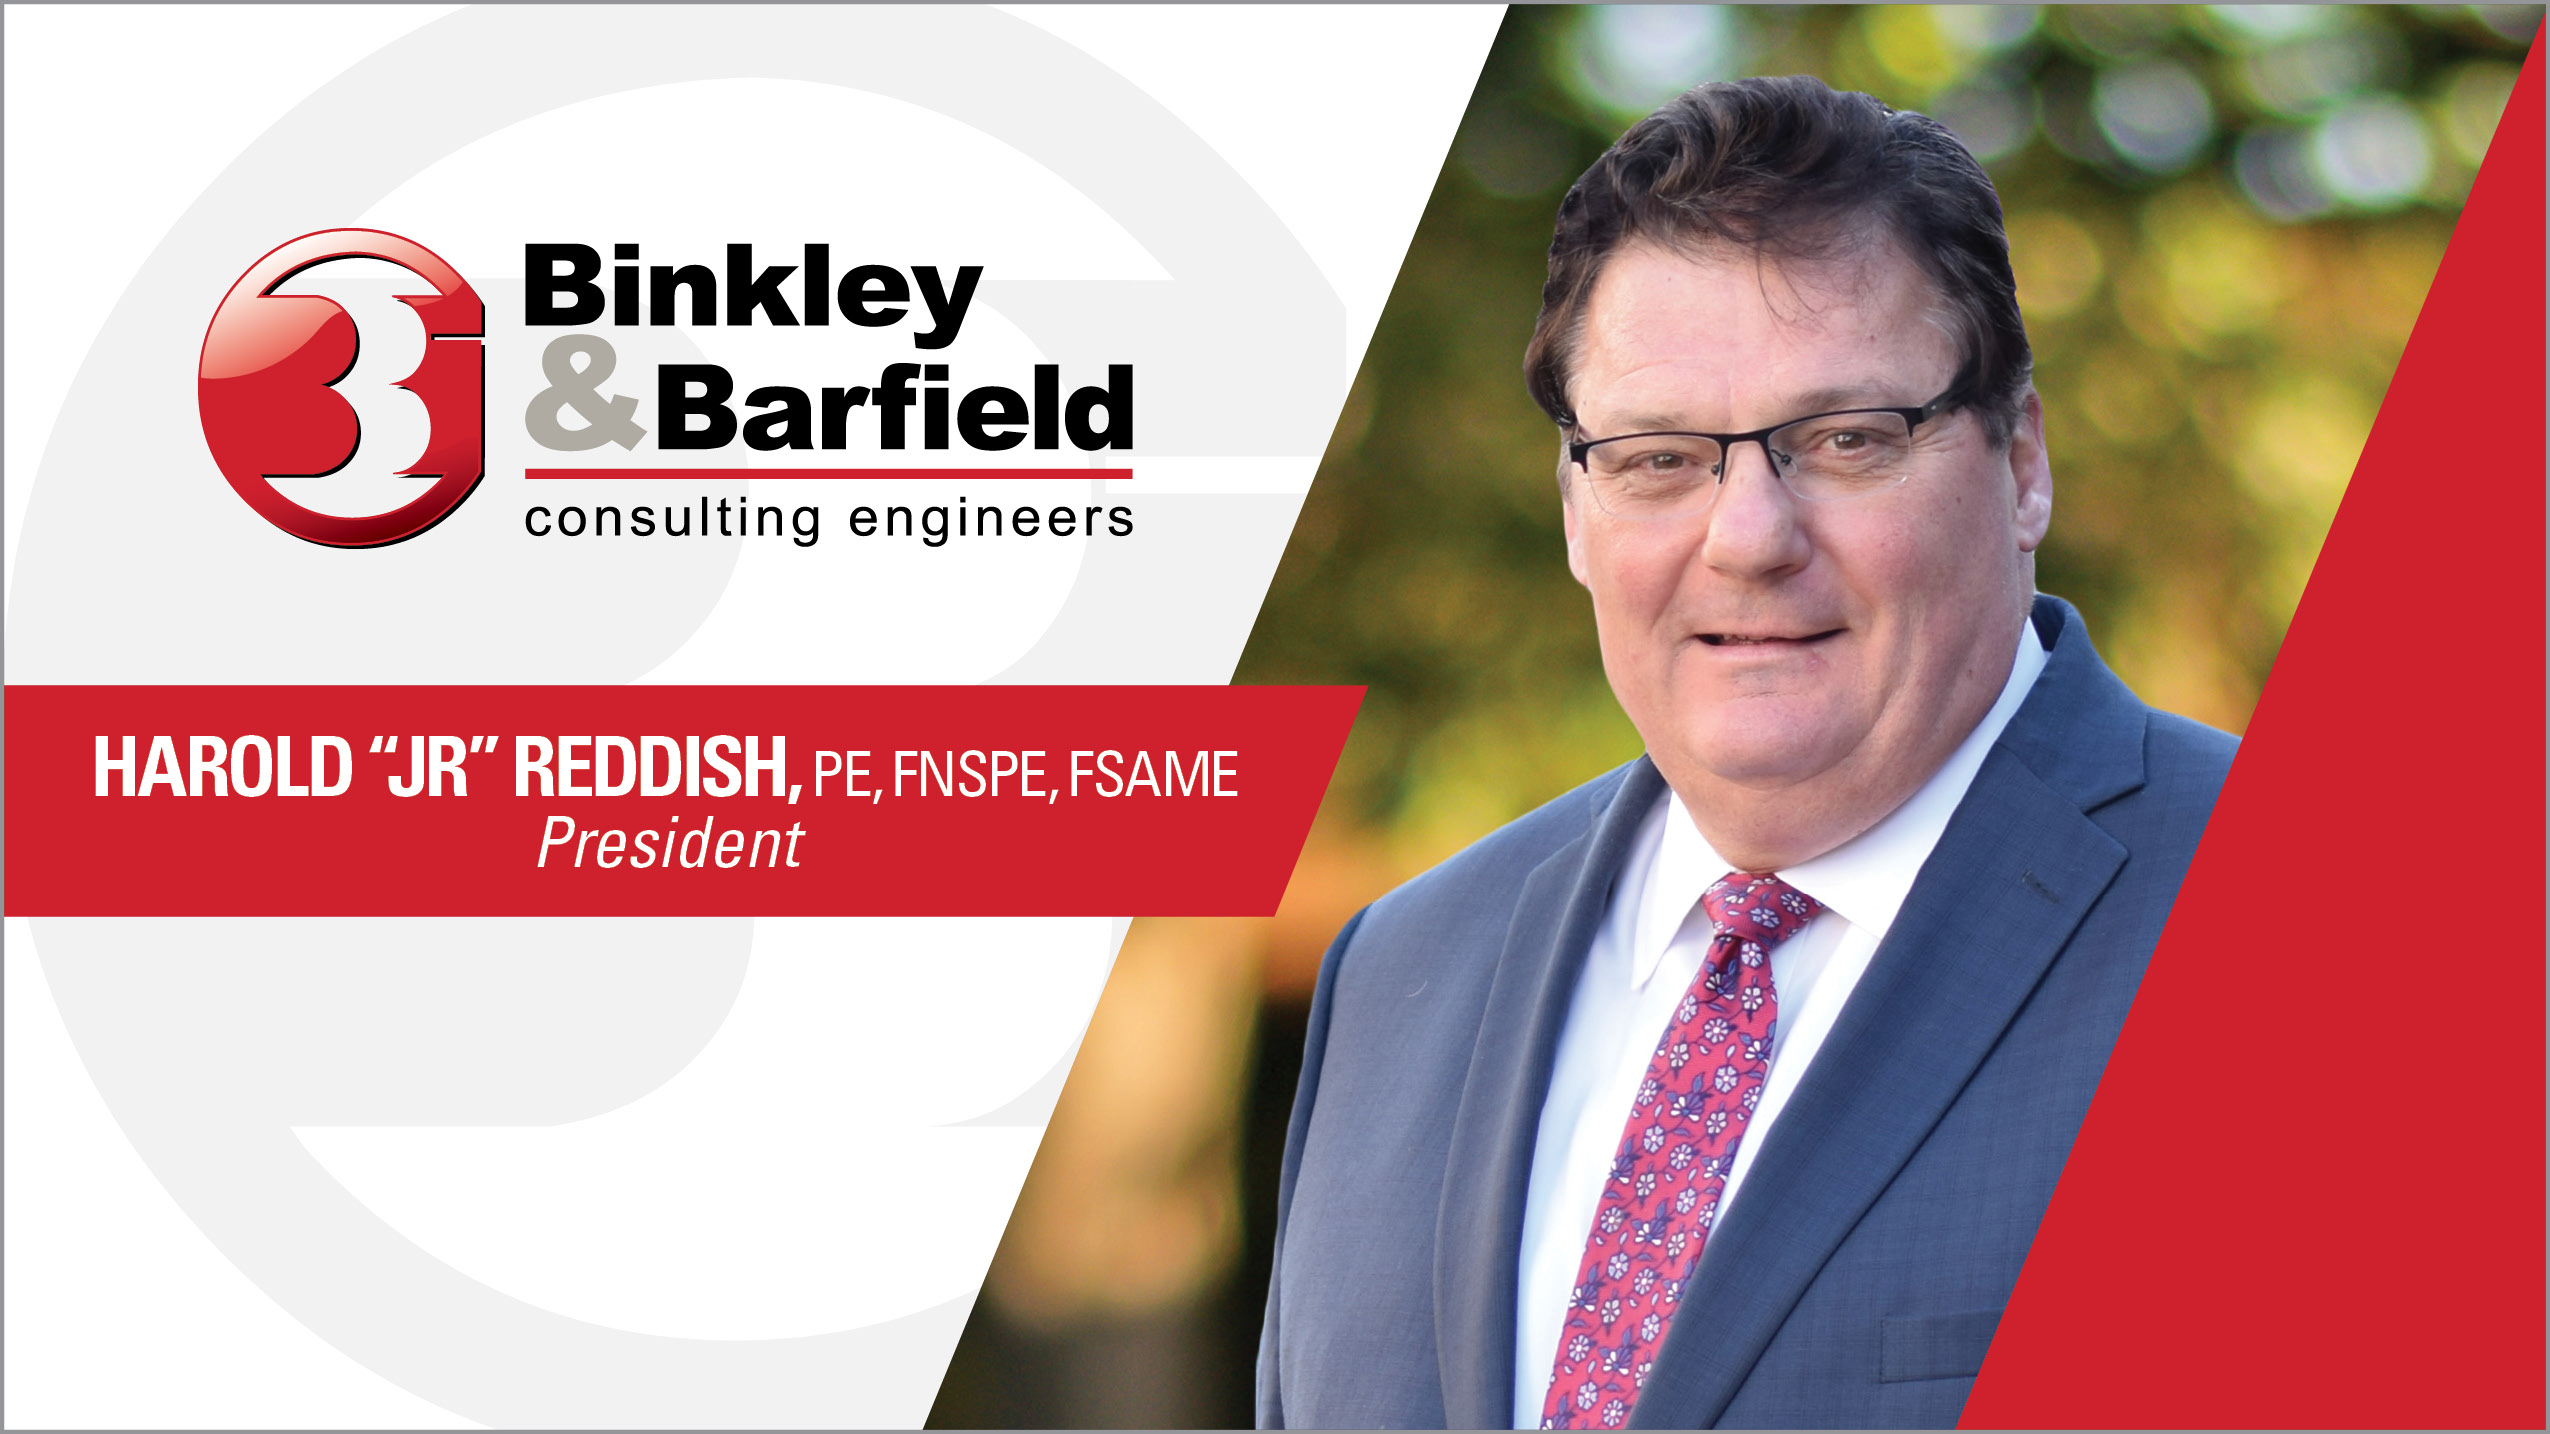 Binkley & Barfield announces Harold "JR" Reddish as President